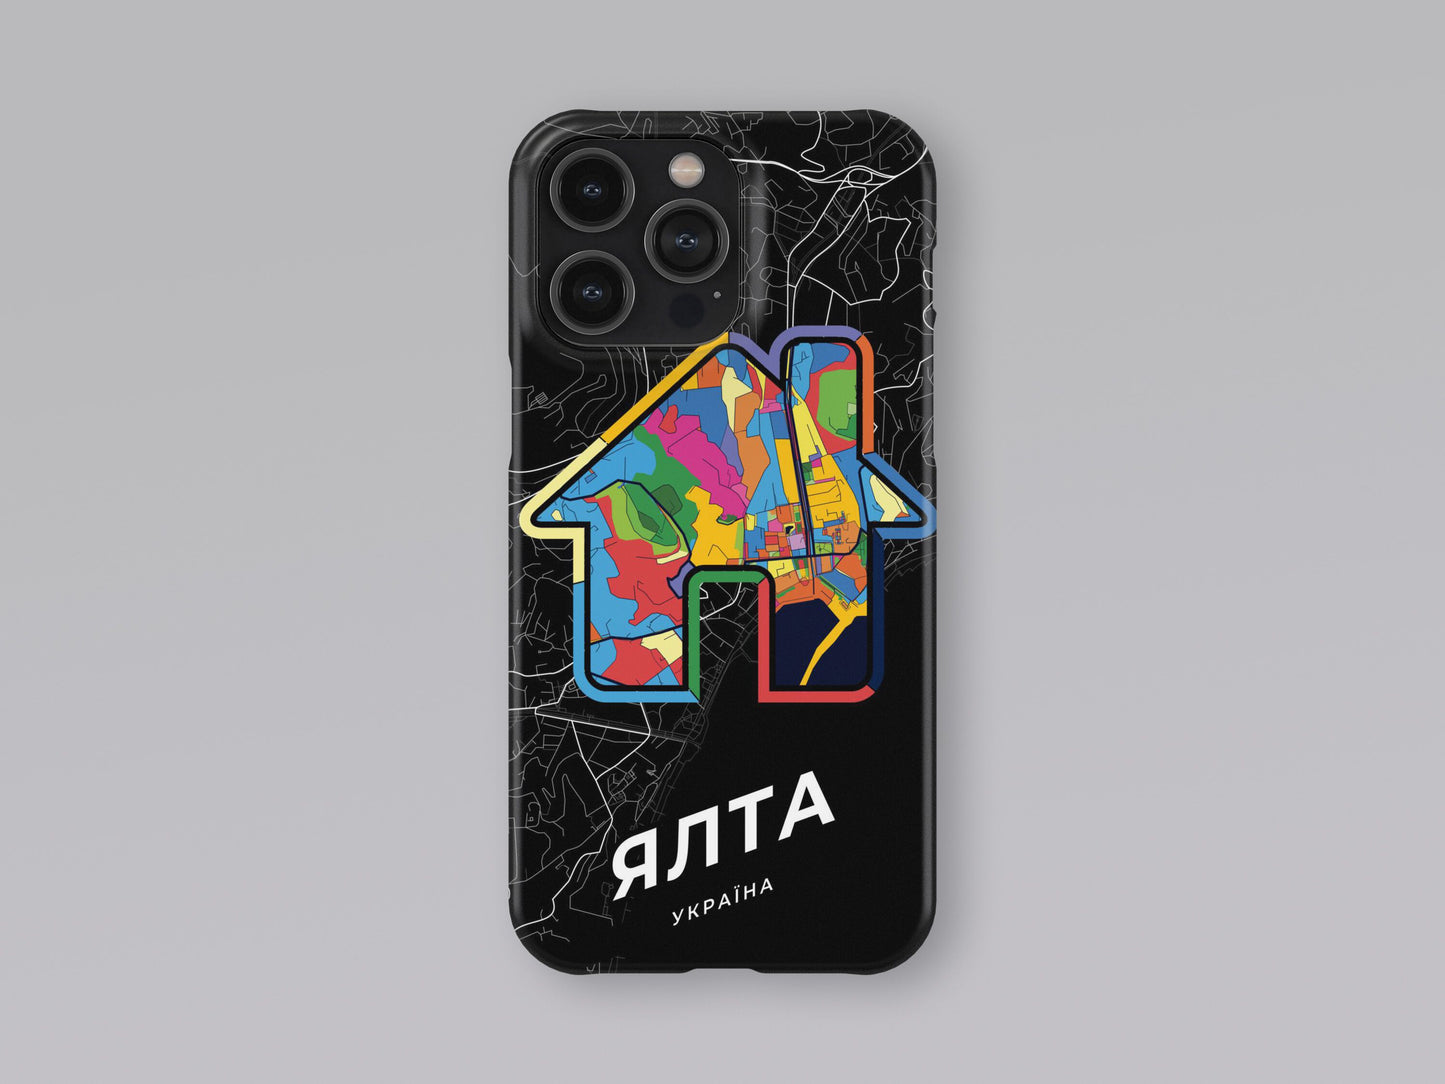 Yalta Ukraine slim phone case with colorful icon 3